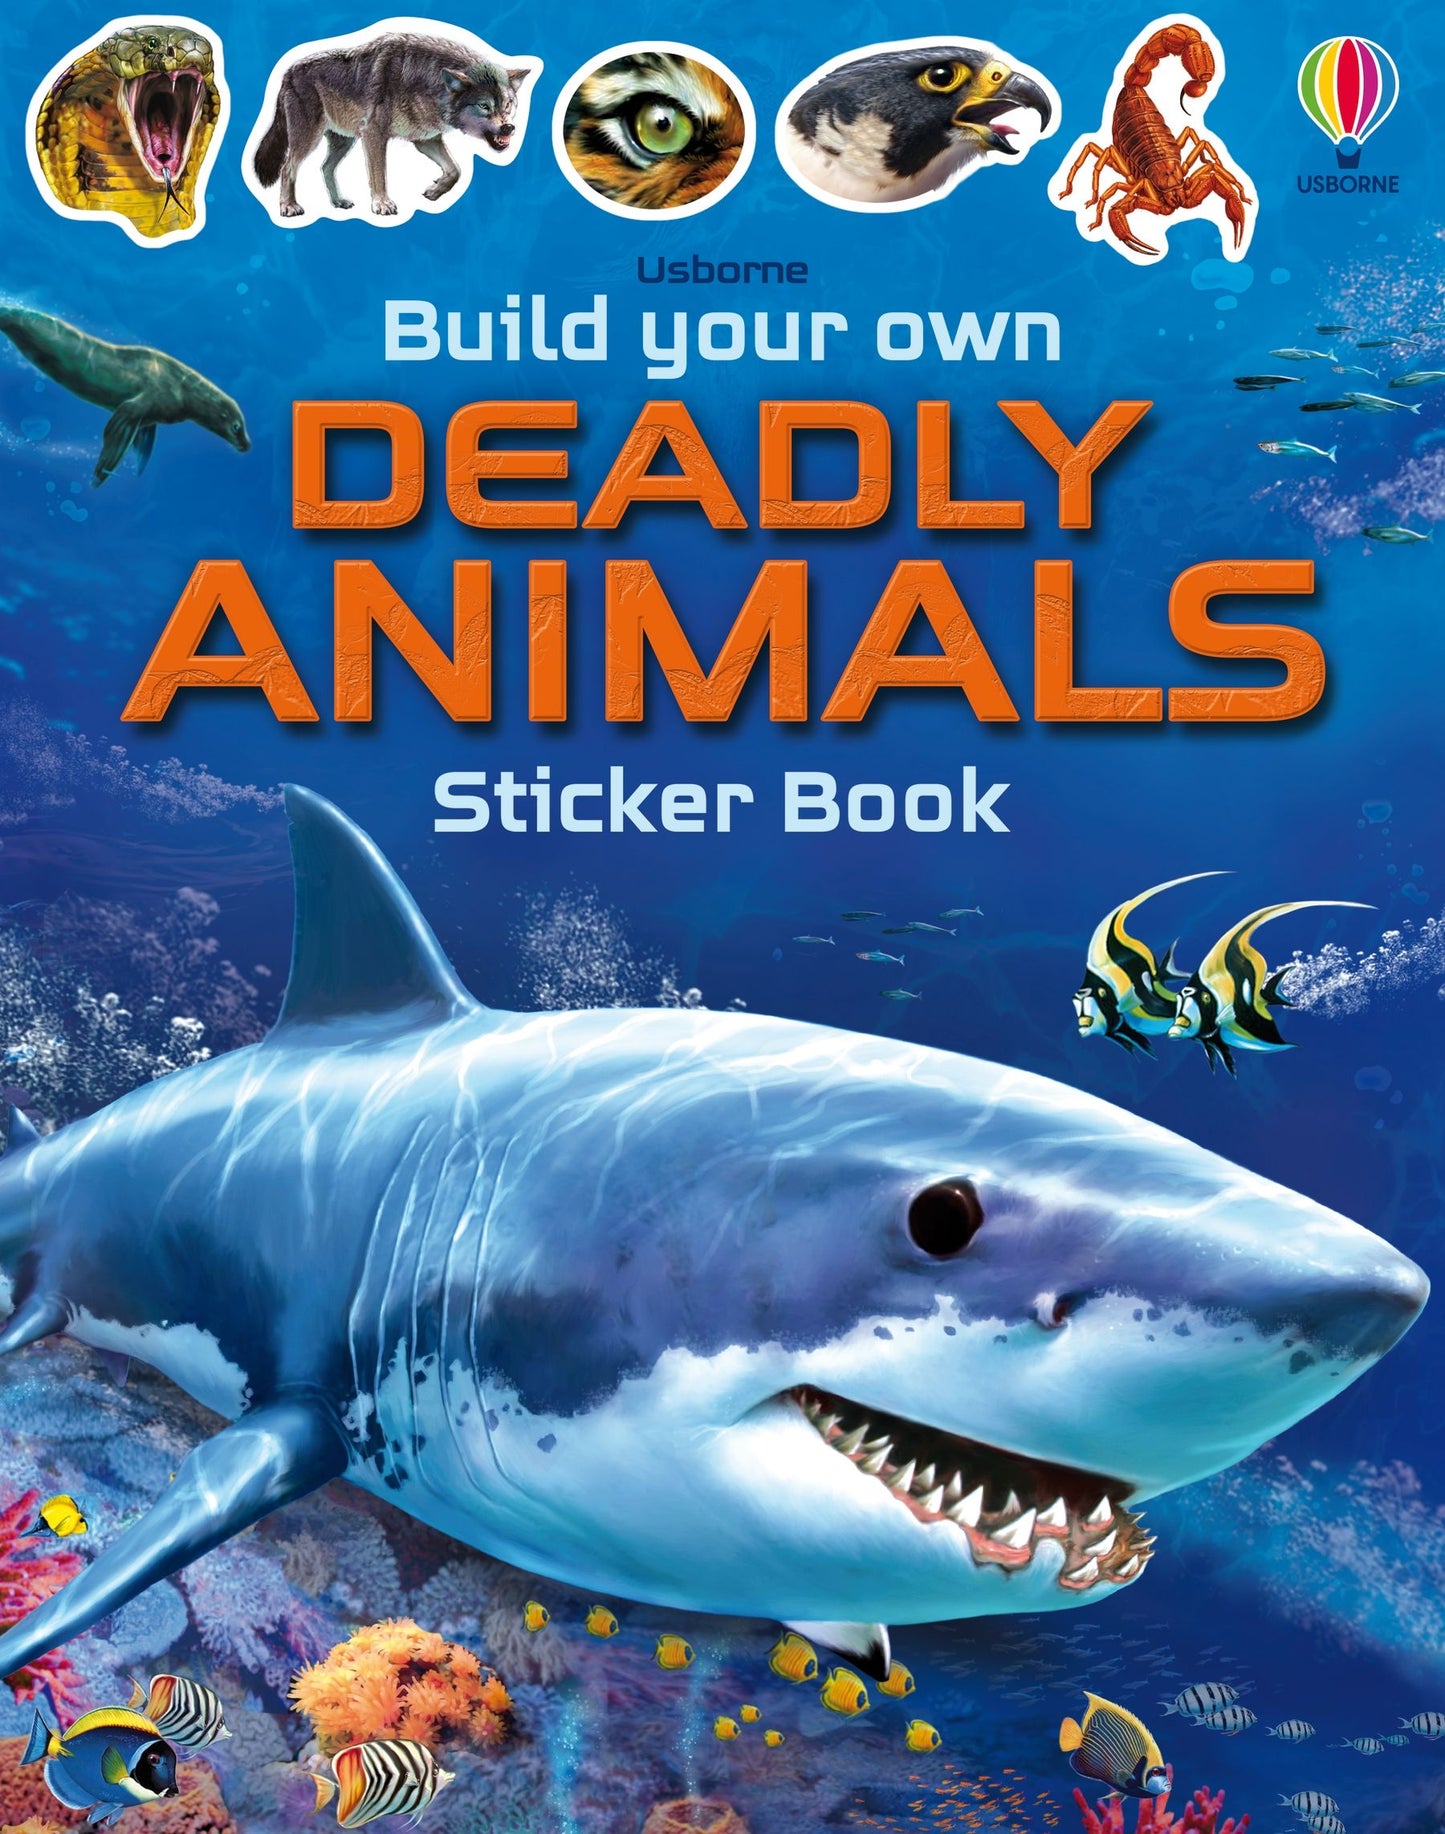 Build Your Own Sticker Book 192 GIFT CHILD Usborne Books Deadly Animals 